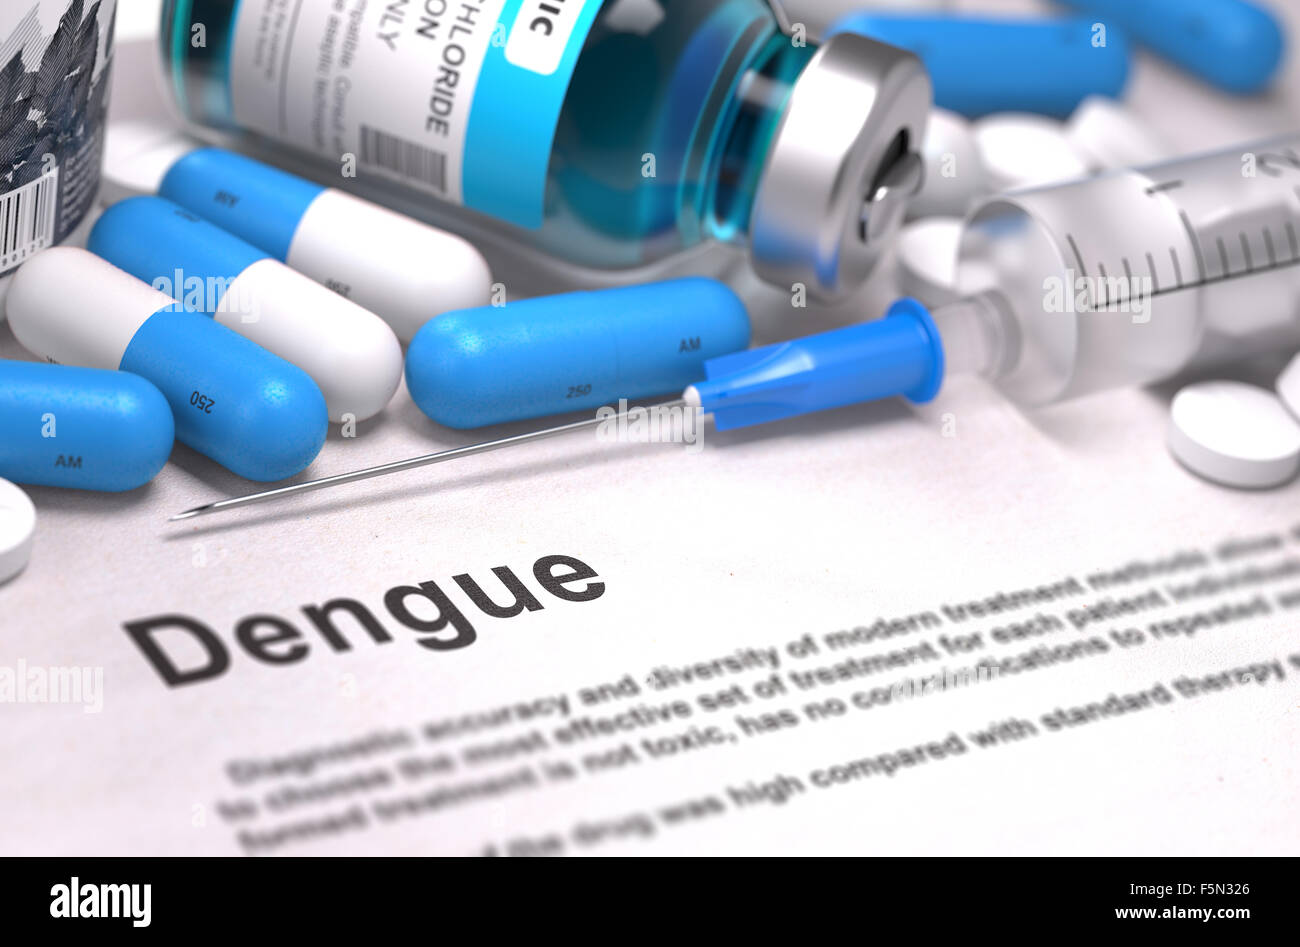 Dengue Diagnosis. Medical Concept. Composition of Medicaments. Stock Photo